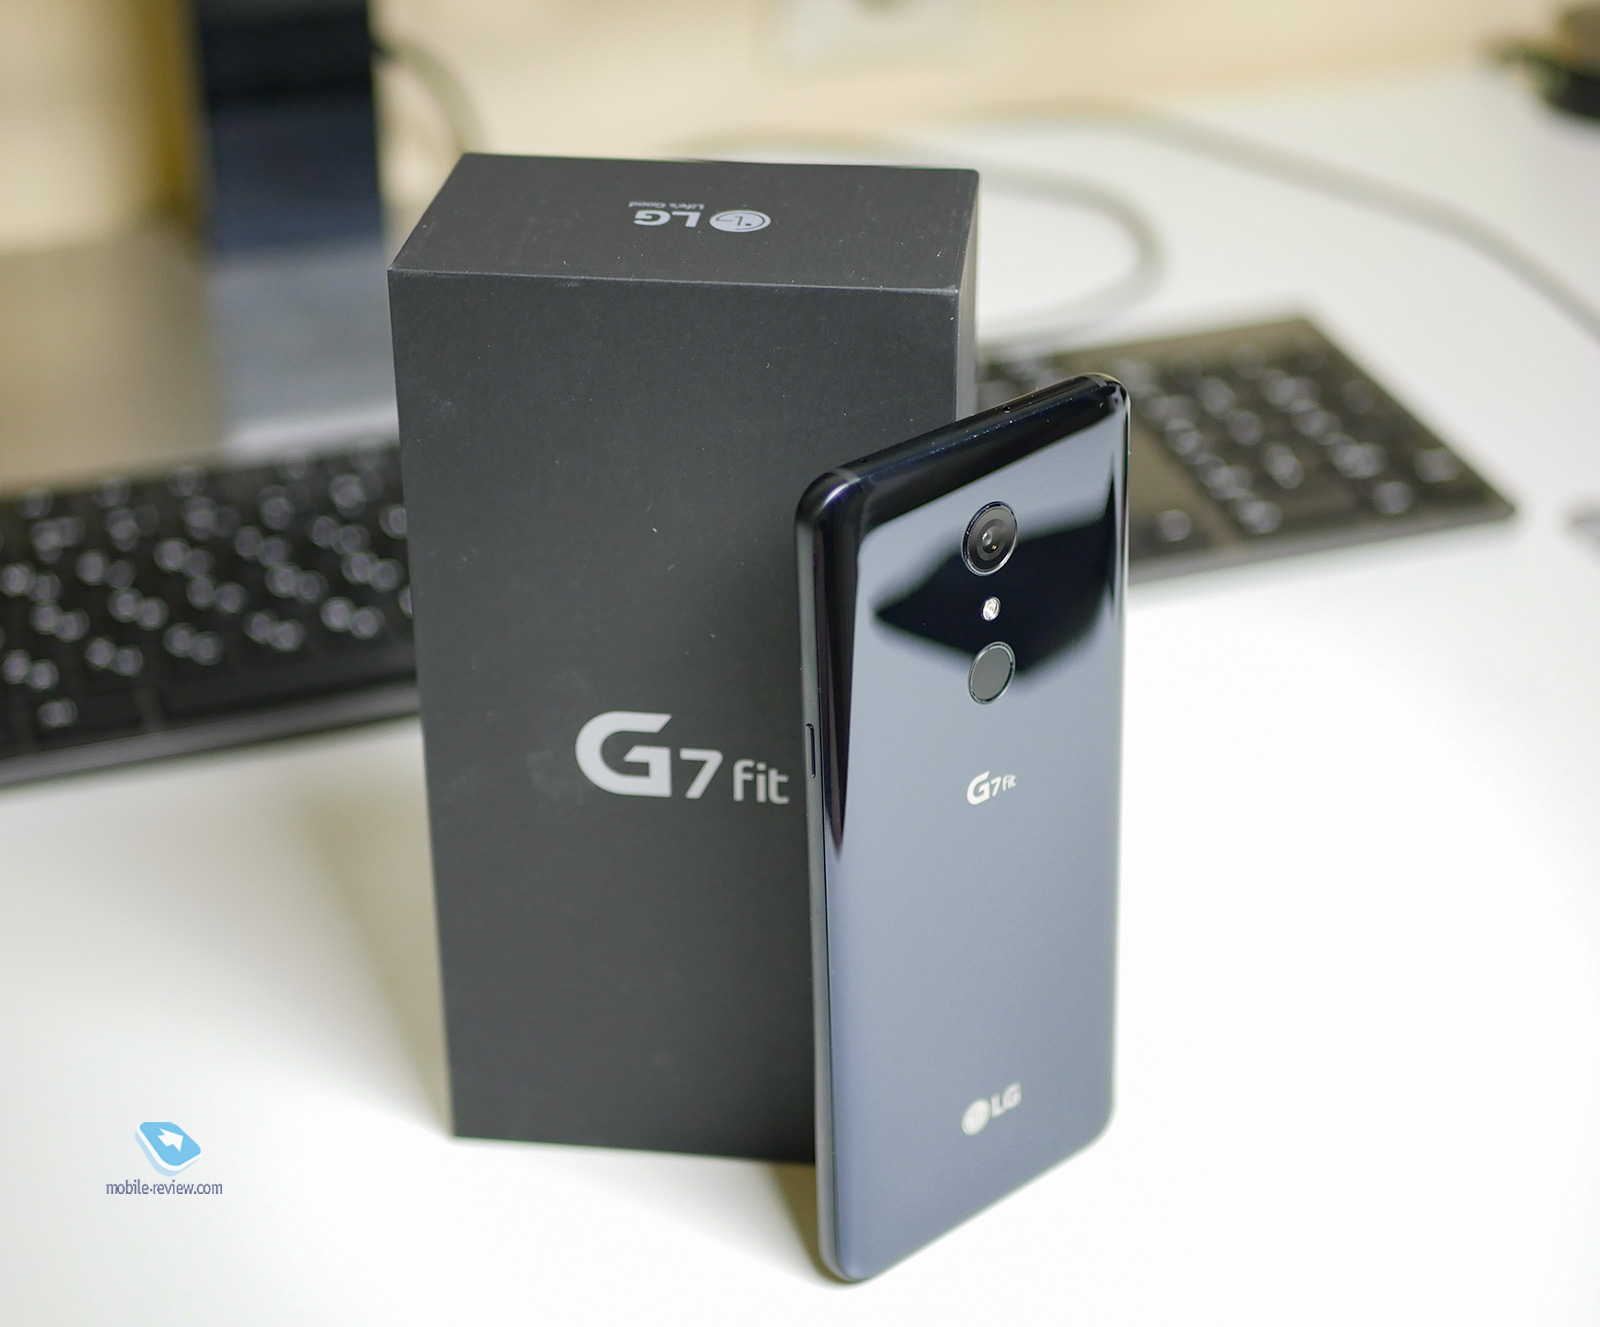 LG G7 fit